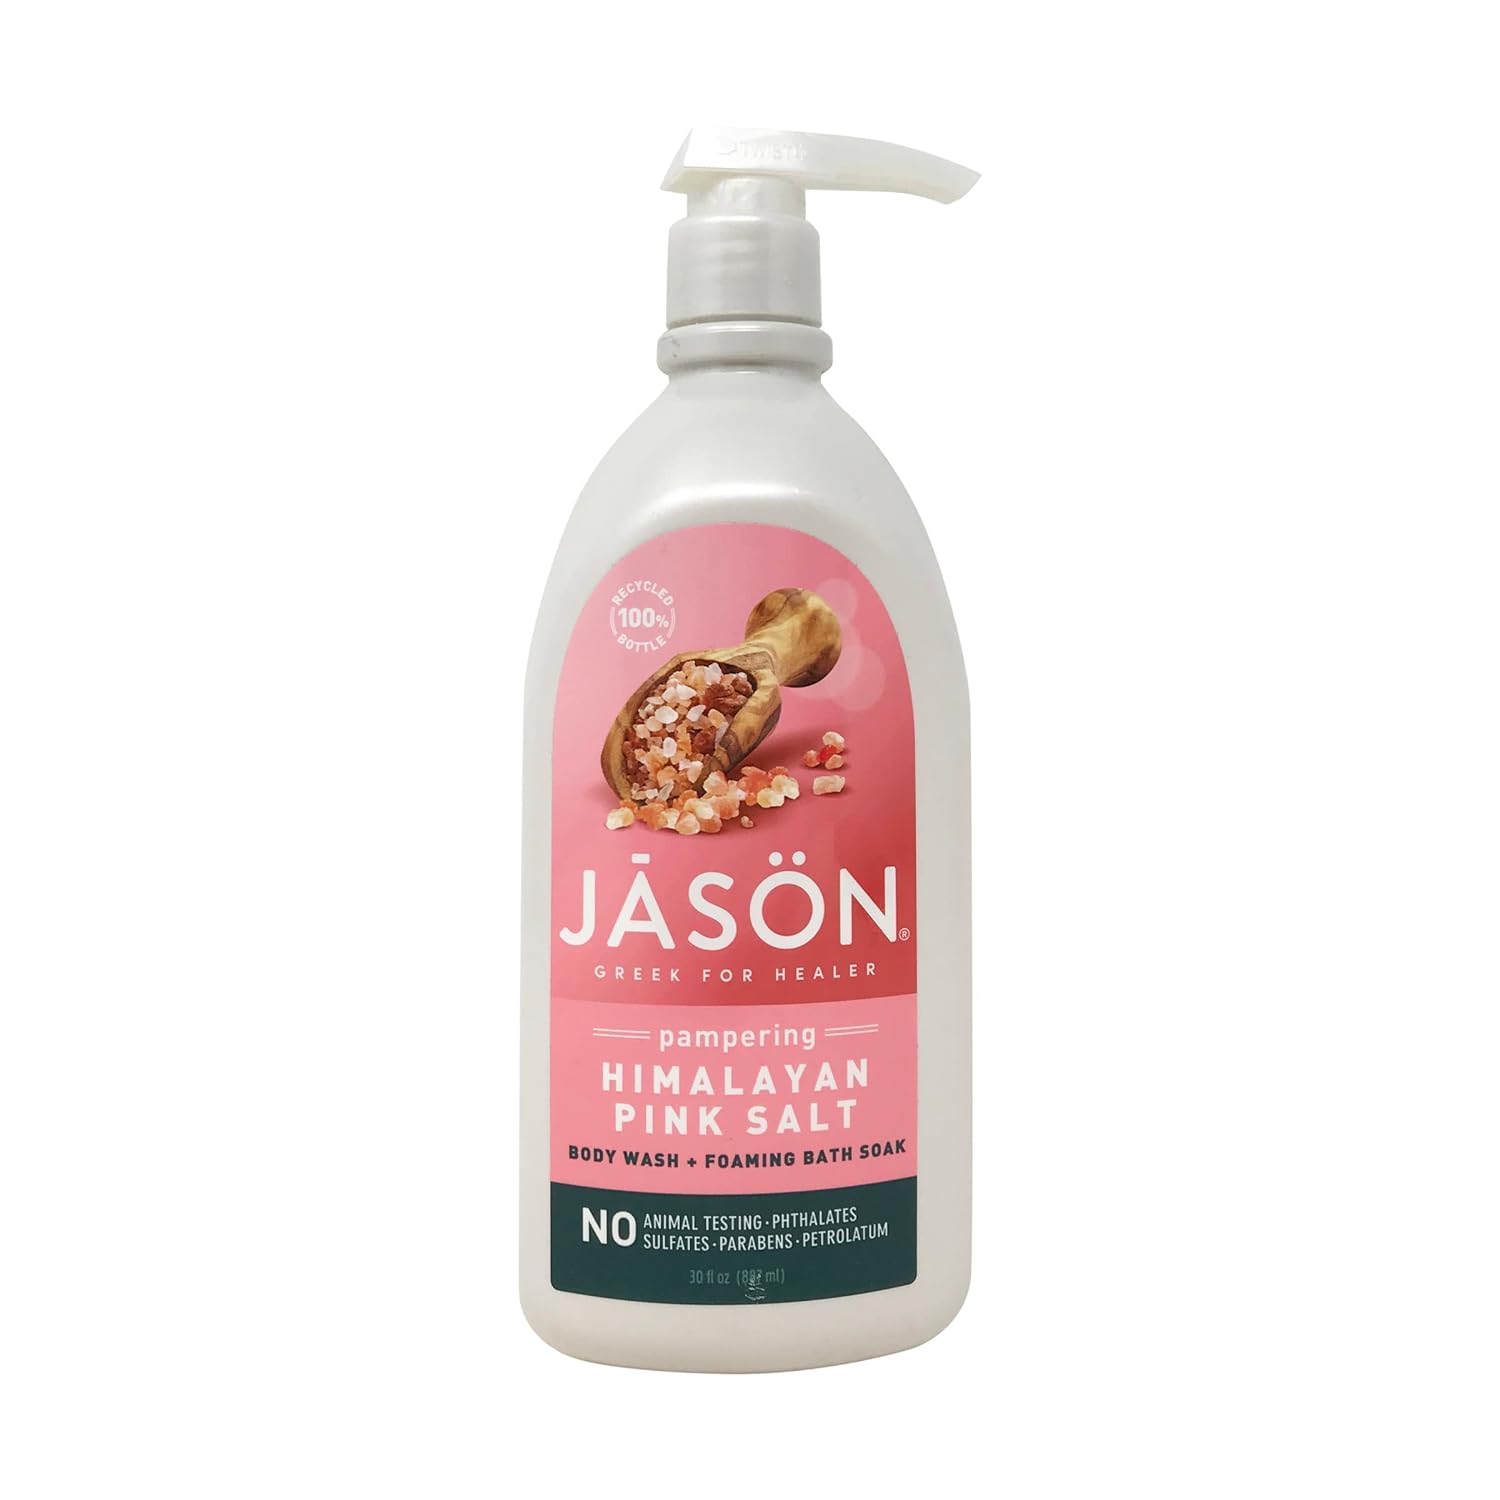 Jason Pampering Himalayan Pink Salt 2 in 1 Foaming Bath Soak & Body Wash 30 fl oz : Beauty & Personal Care